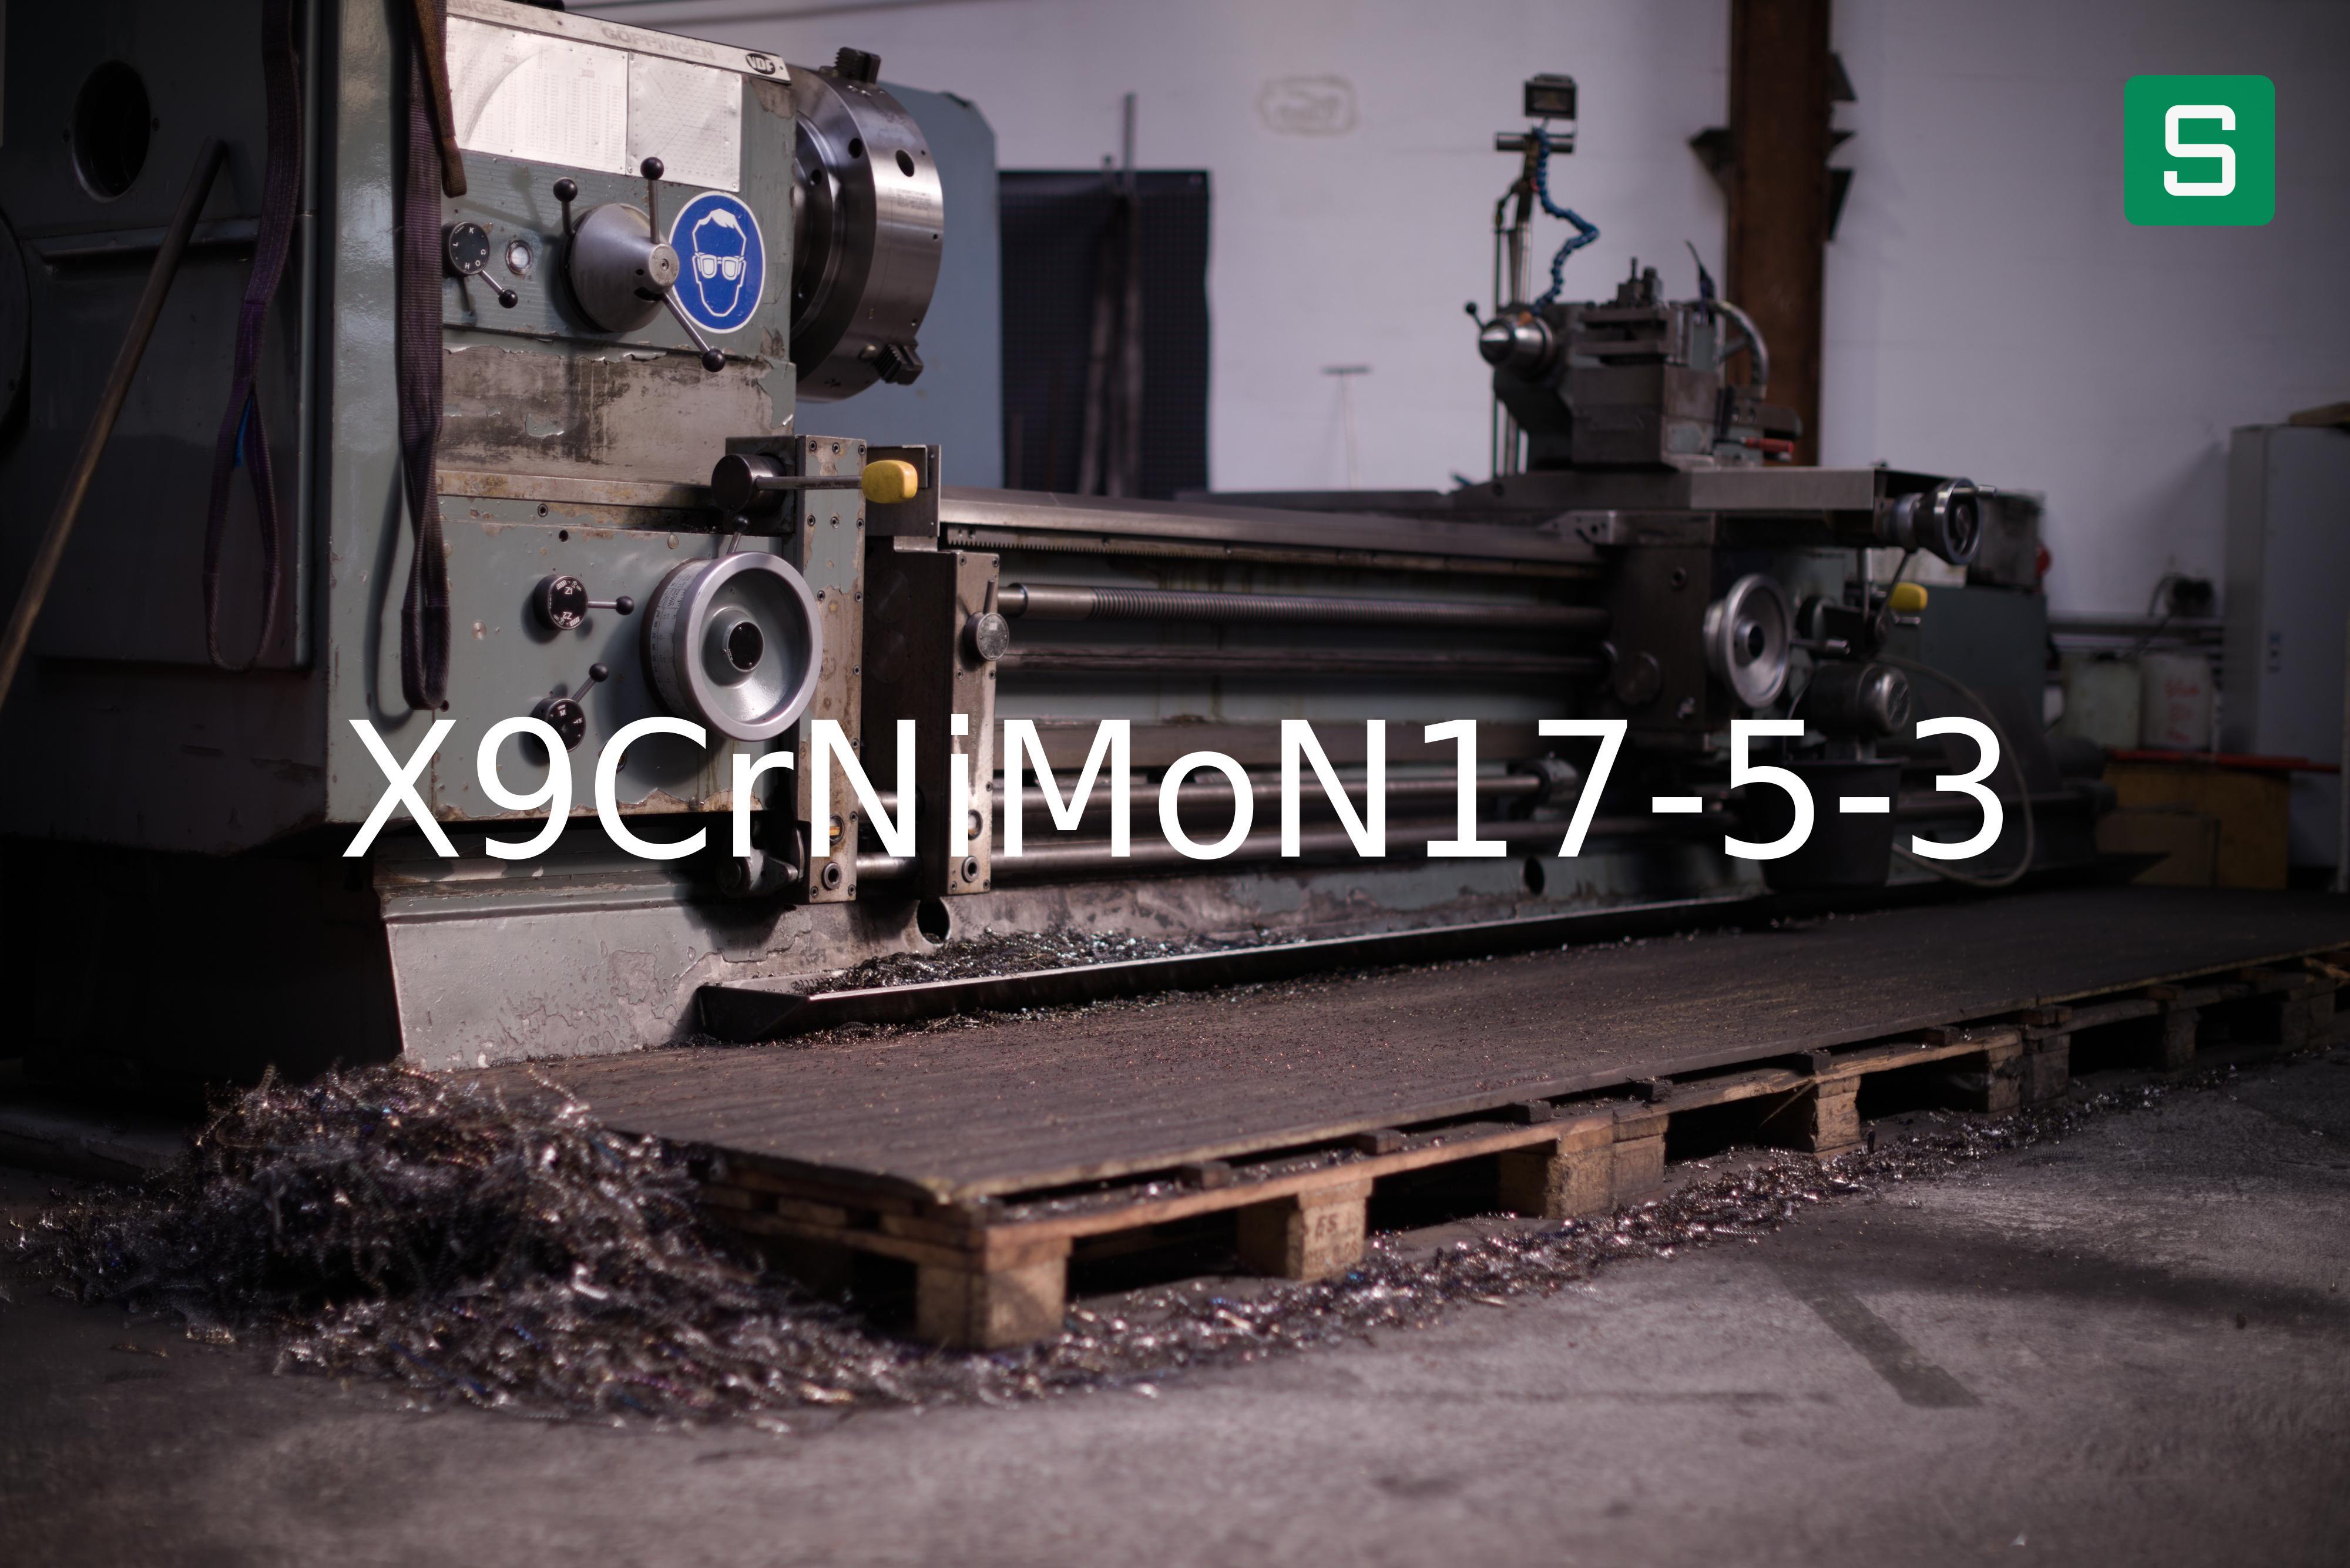 Steel Material: X9CrNiMoN17-5-3